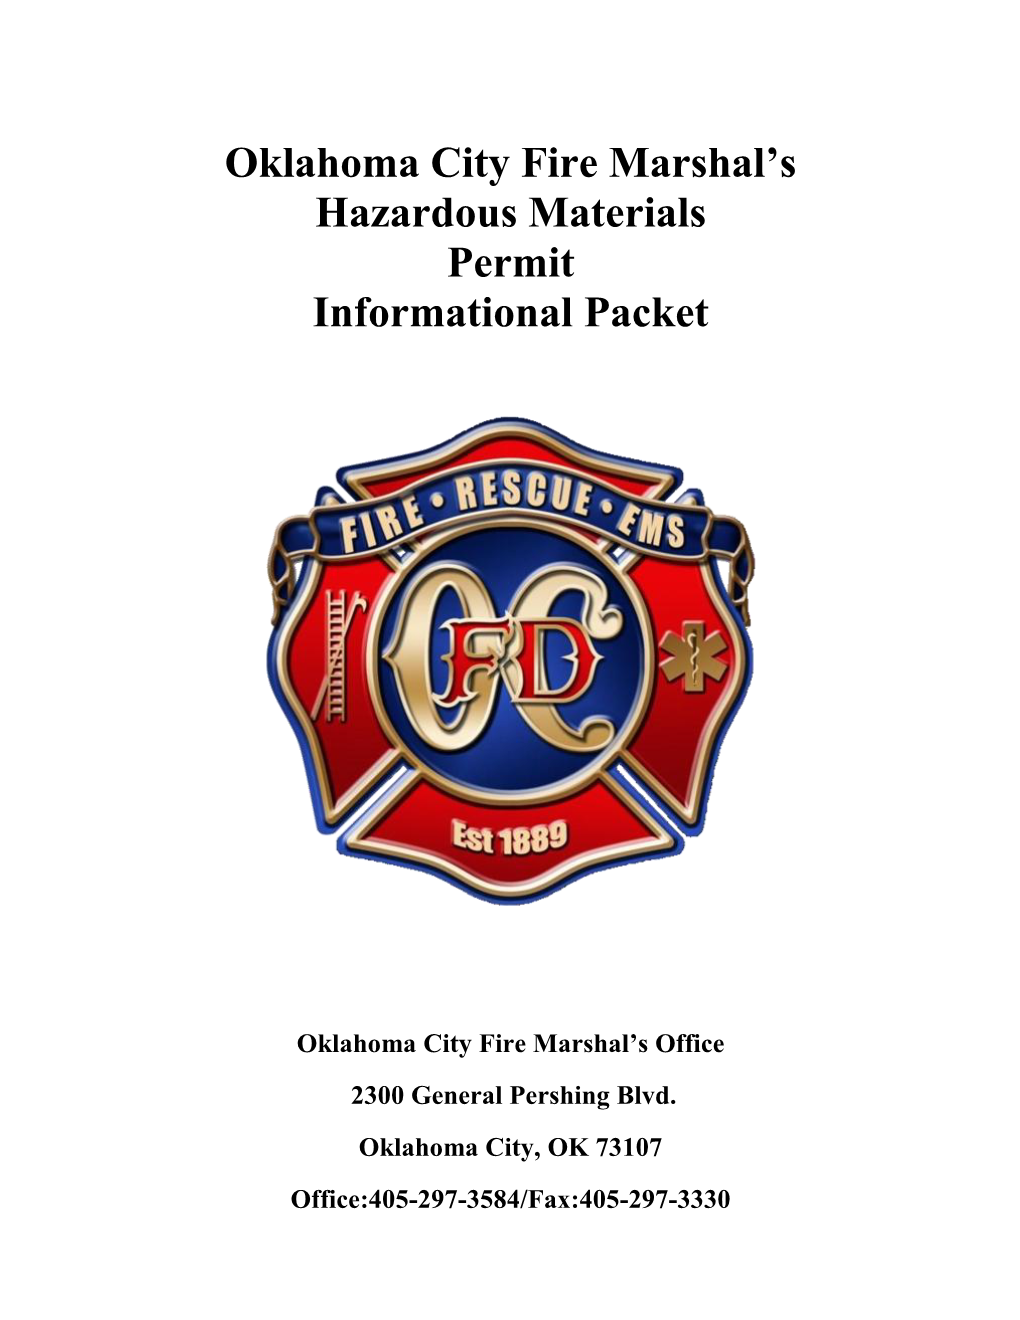 Oklahoma City Fire Marshal‟S Hazardous Materials Permit Informational Packet